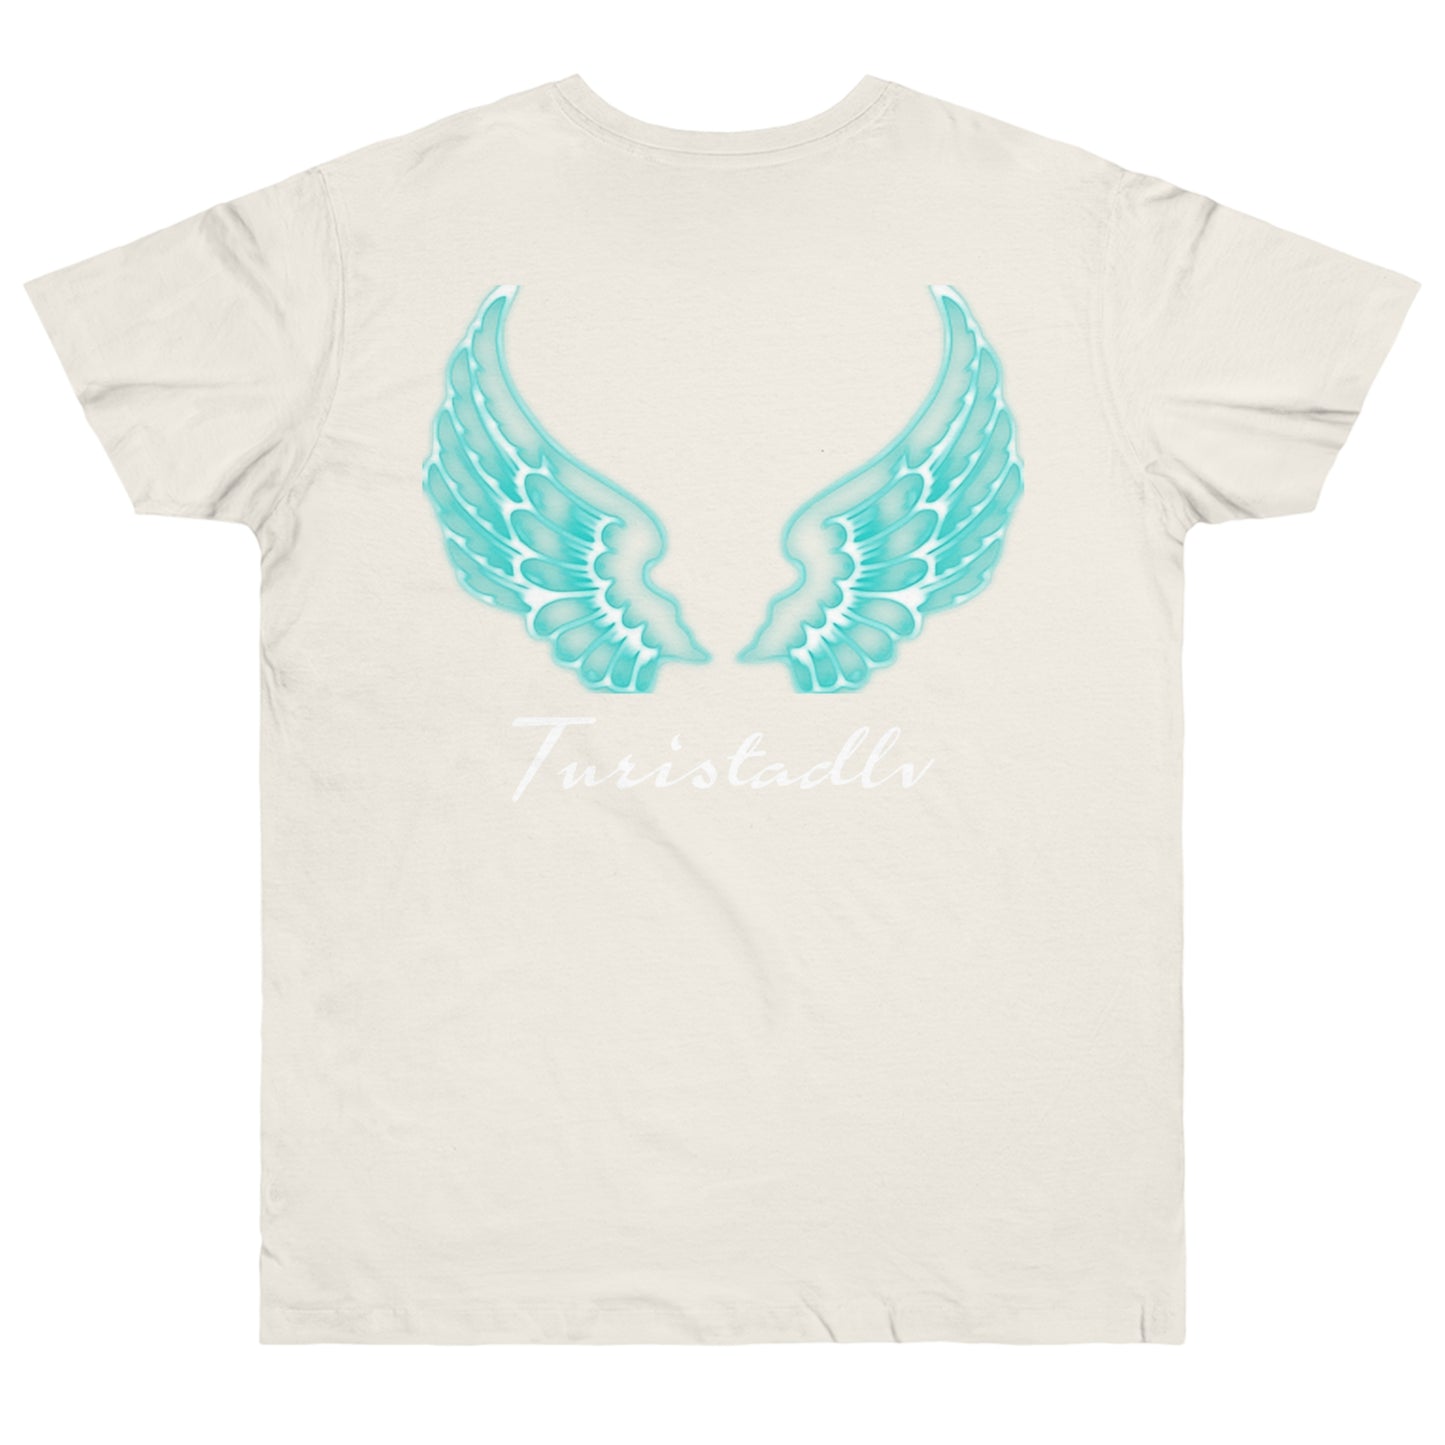 Camiseta de vida nómada, camiseta de viajero, camisa de alma libre, camiseta inspiradora, camiseta de alas, libertad, nómada, regalo.